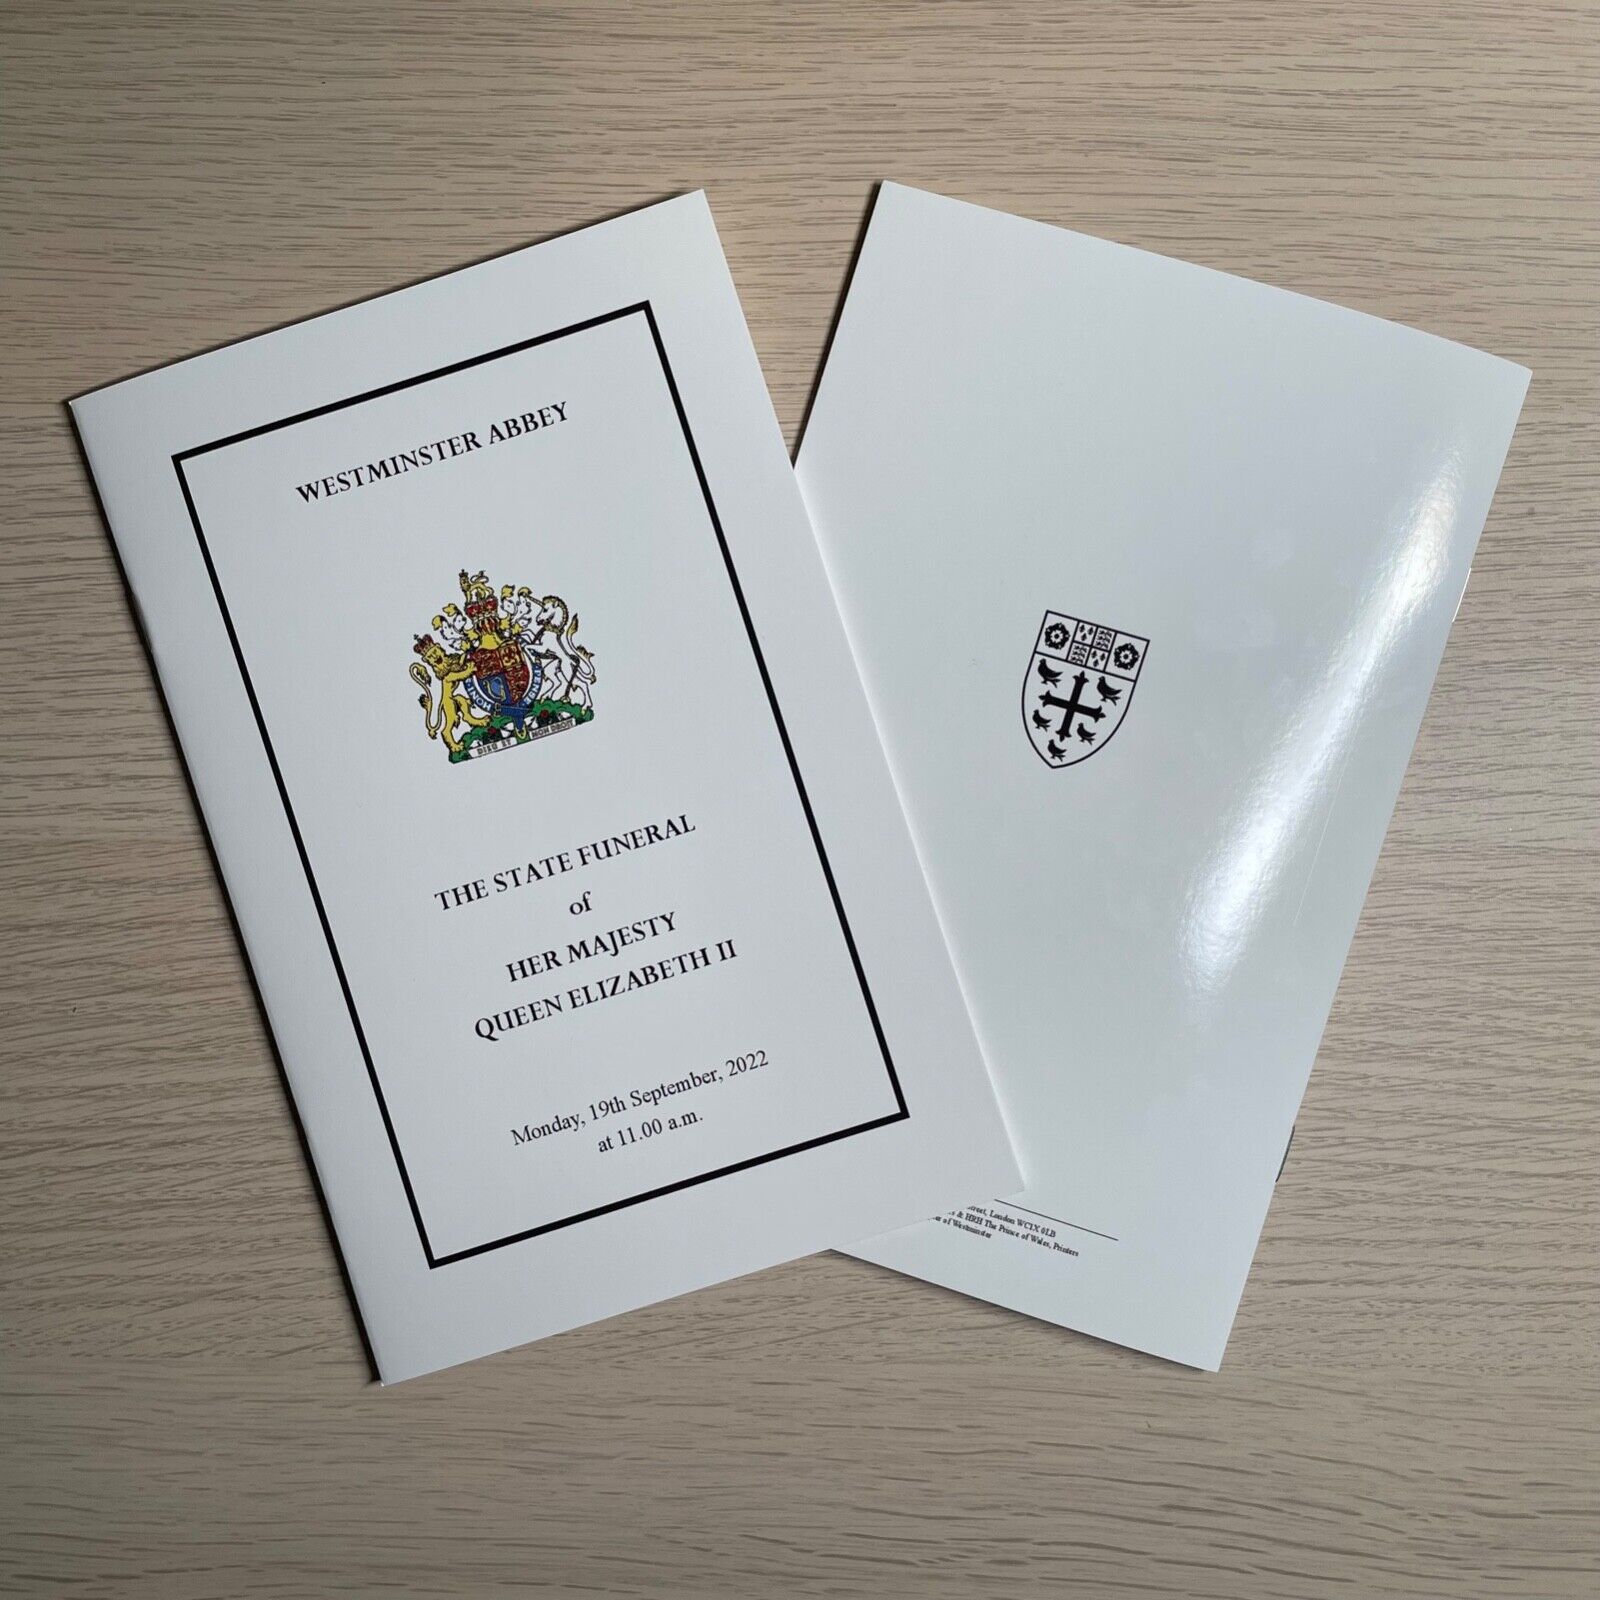 Official Queen Elizabeth II Funeral Order of Service 2022 Booklet coronation